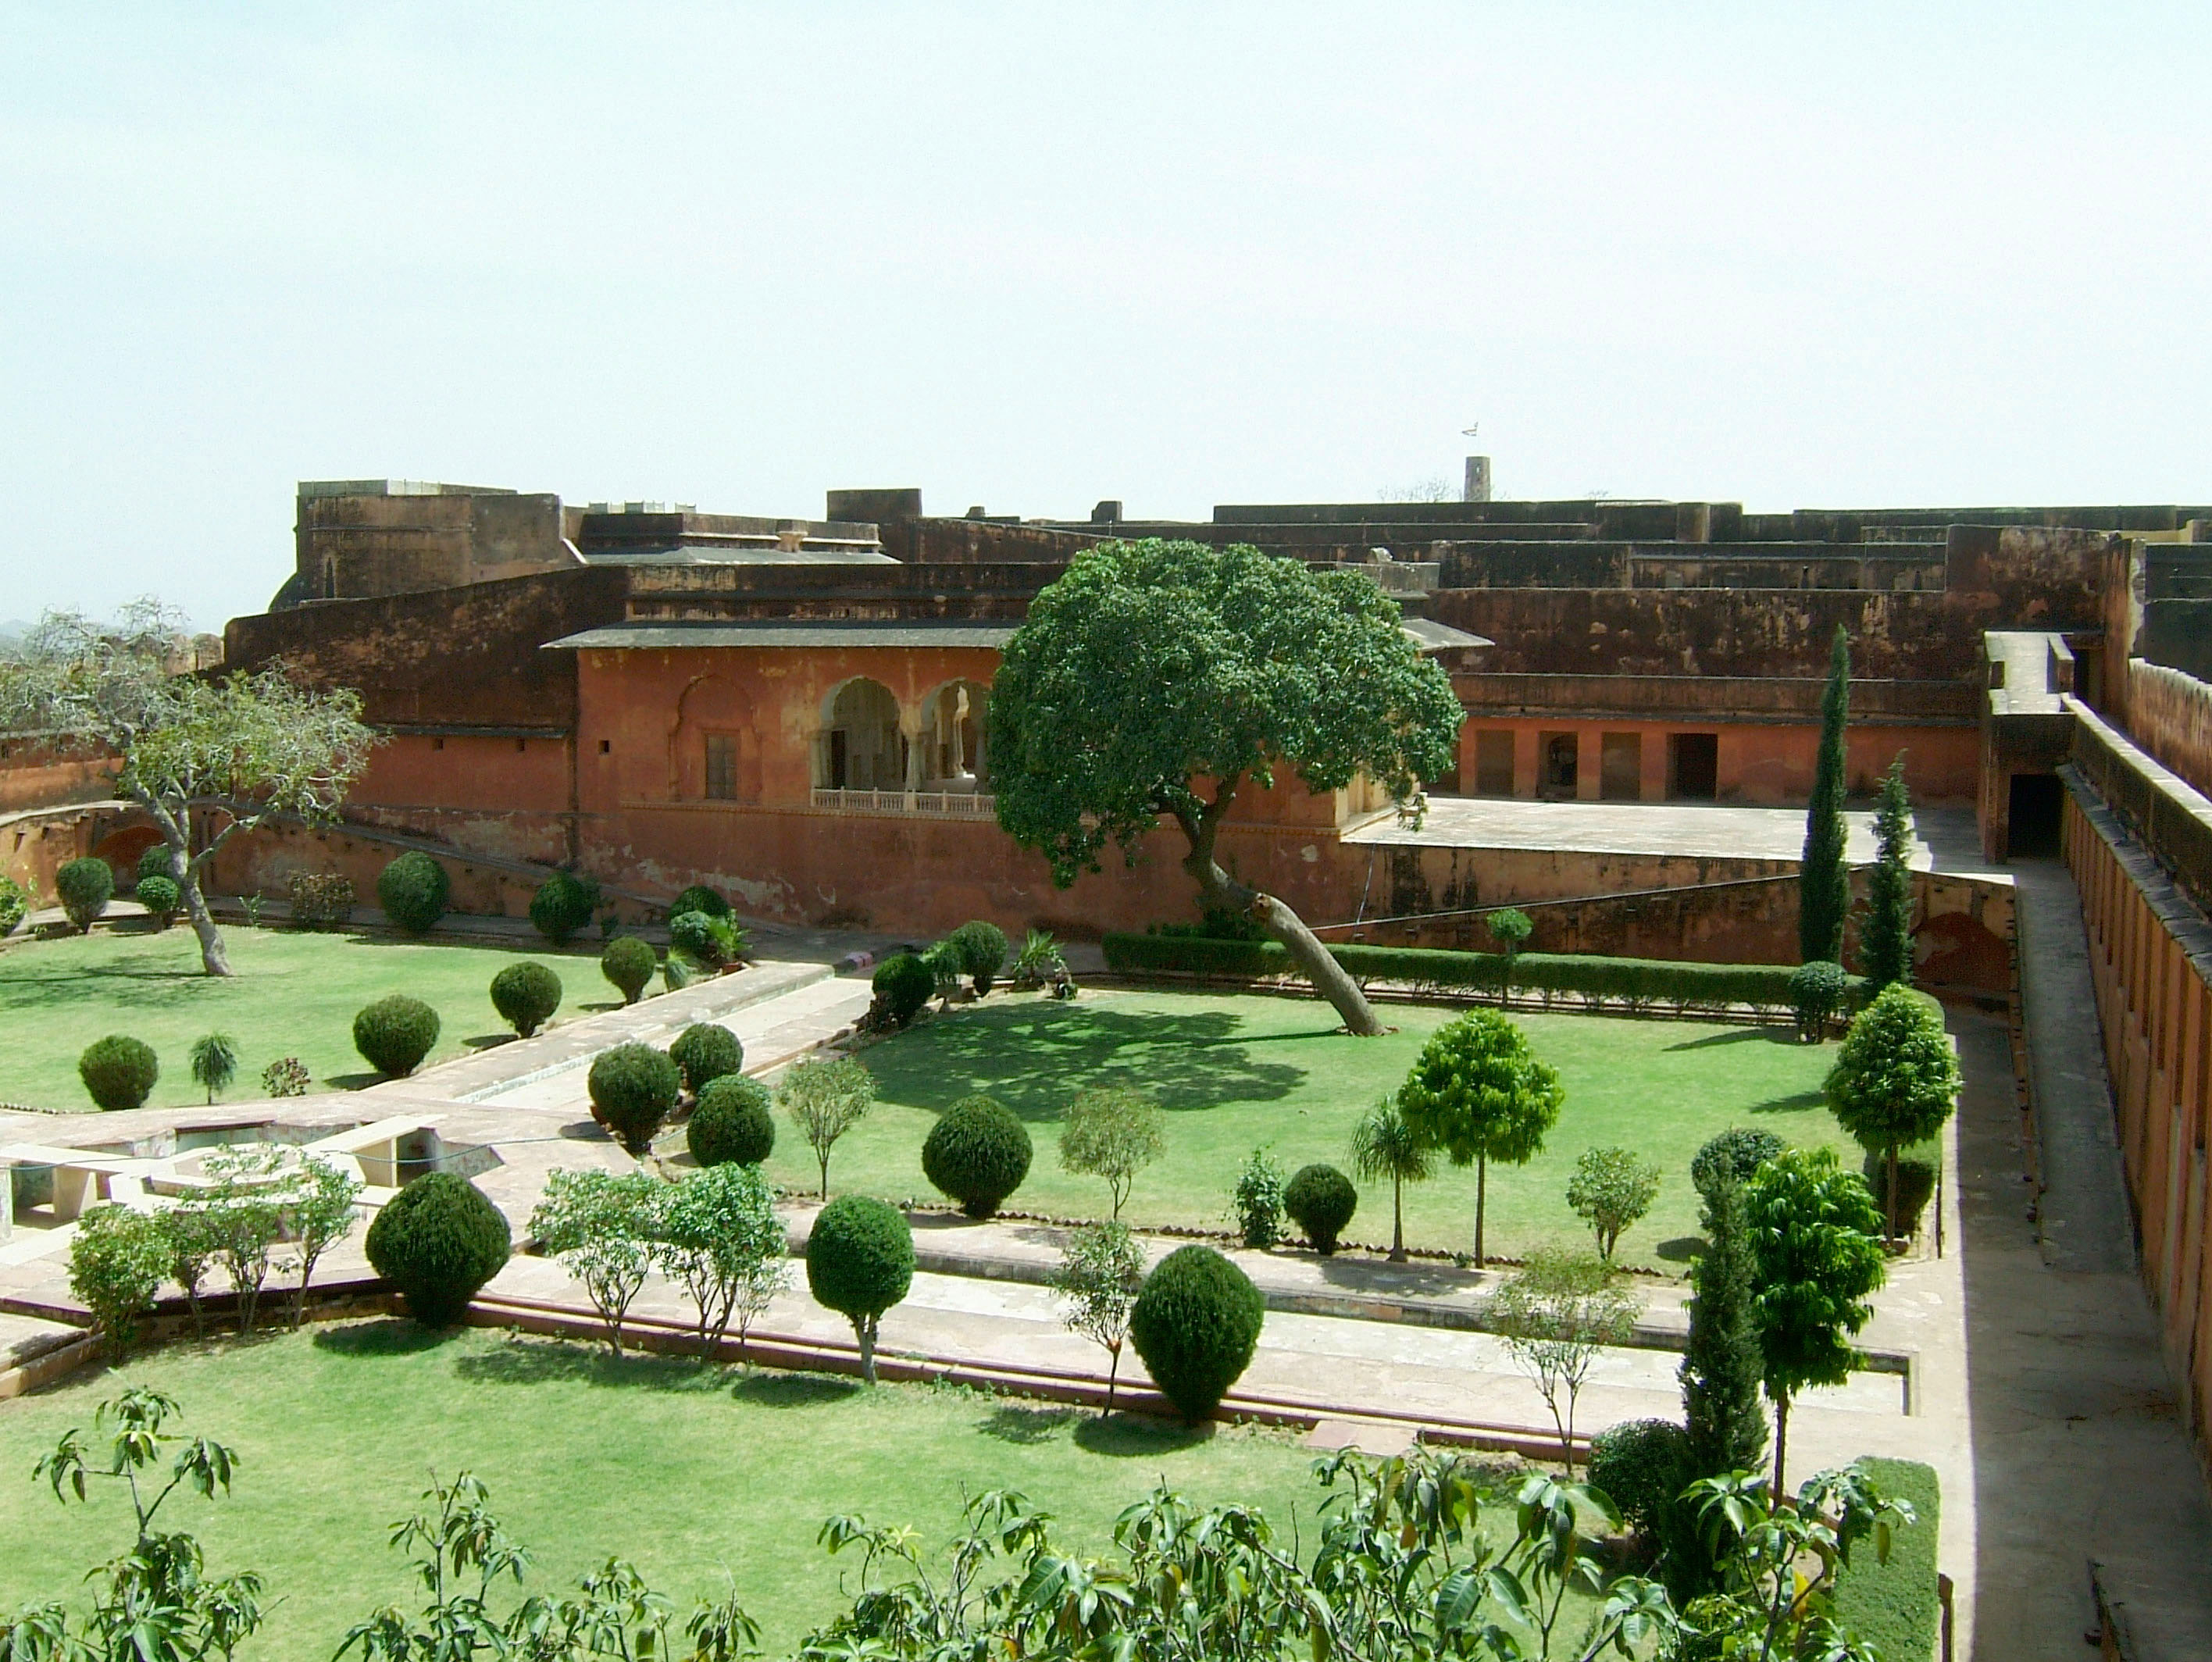 Rajasthan Jaipur Jaigarh Fort compound India Apr 2004 02